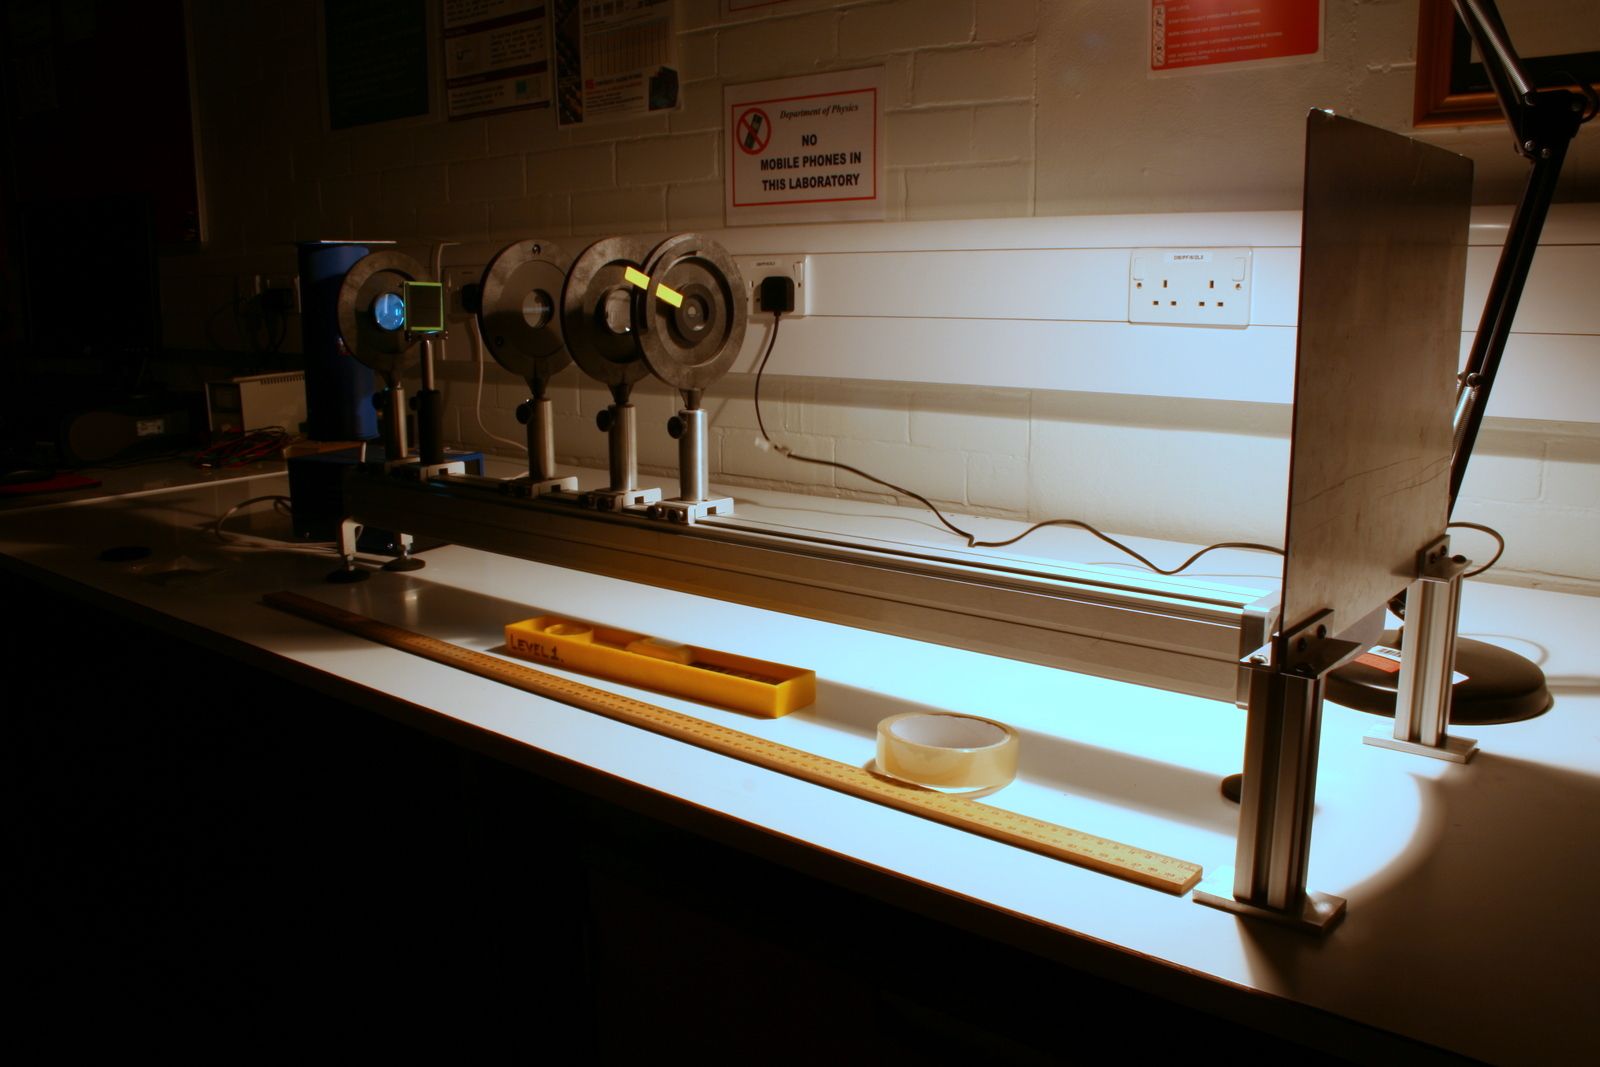 Equipment set up on an optical bench